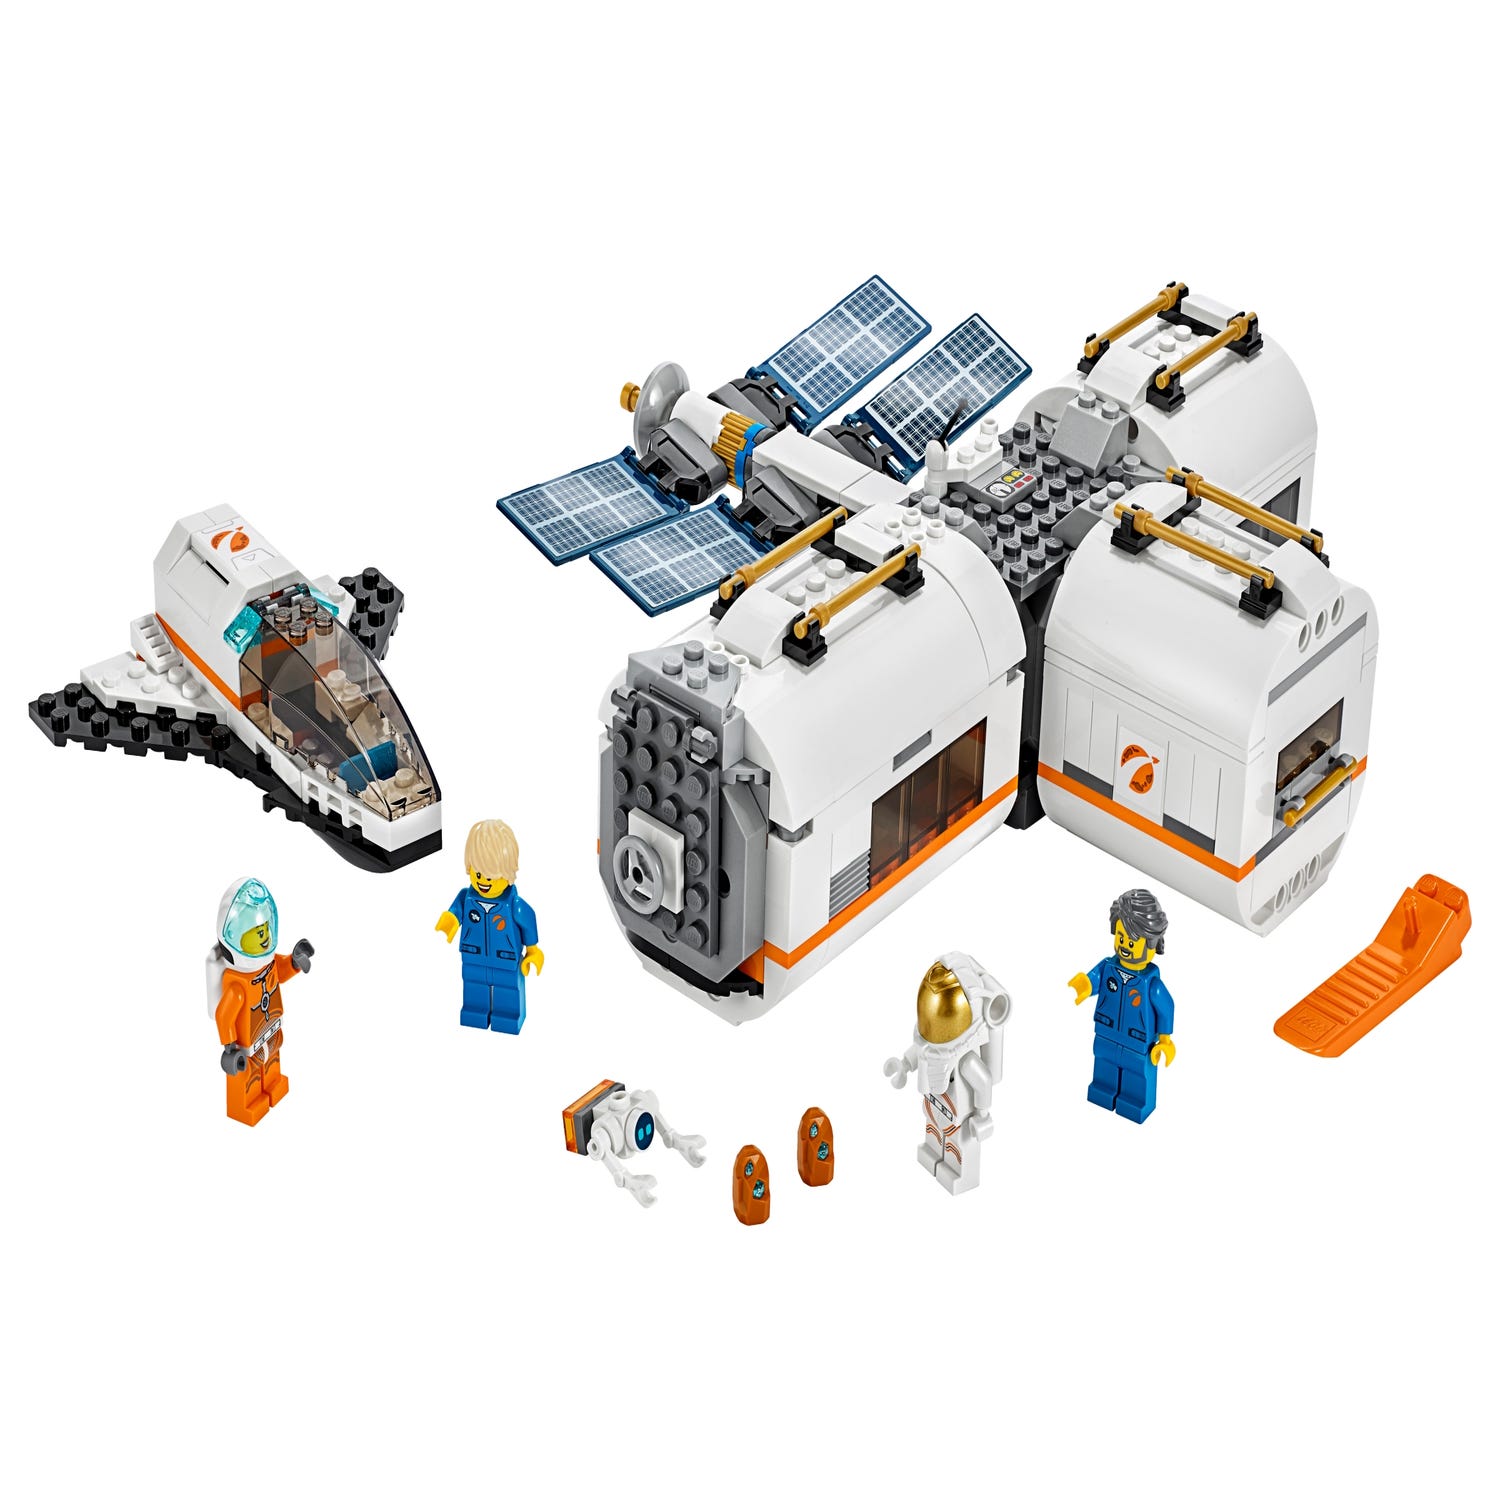 Kompliment skolde Fitness Lunar Space Station 60227 | City | Buy online at the Official LEGO® Shop US